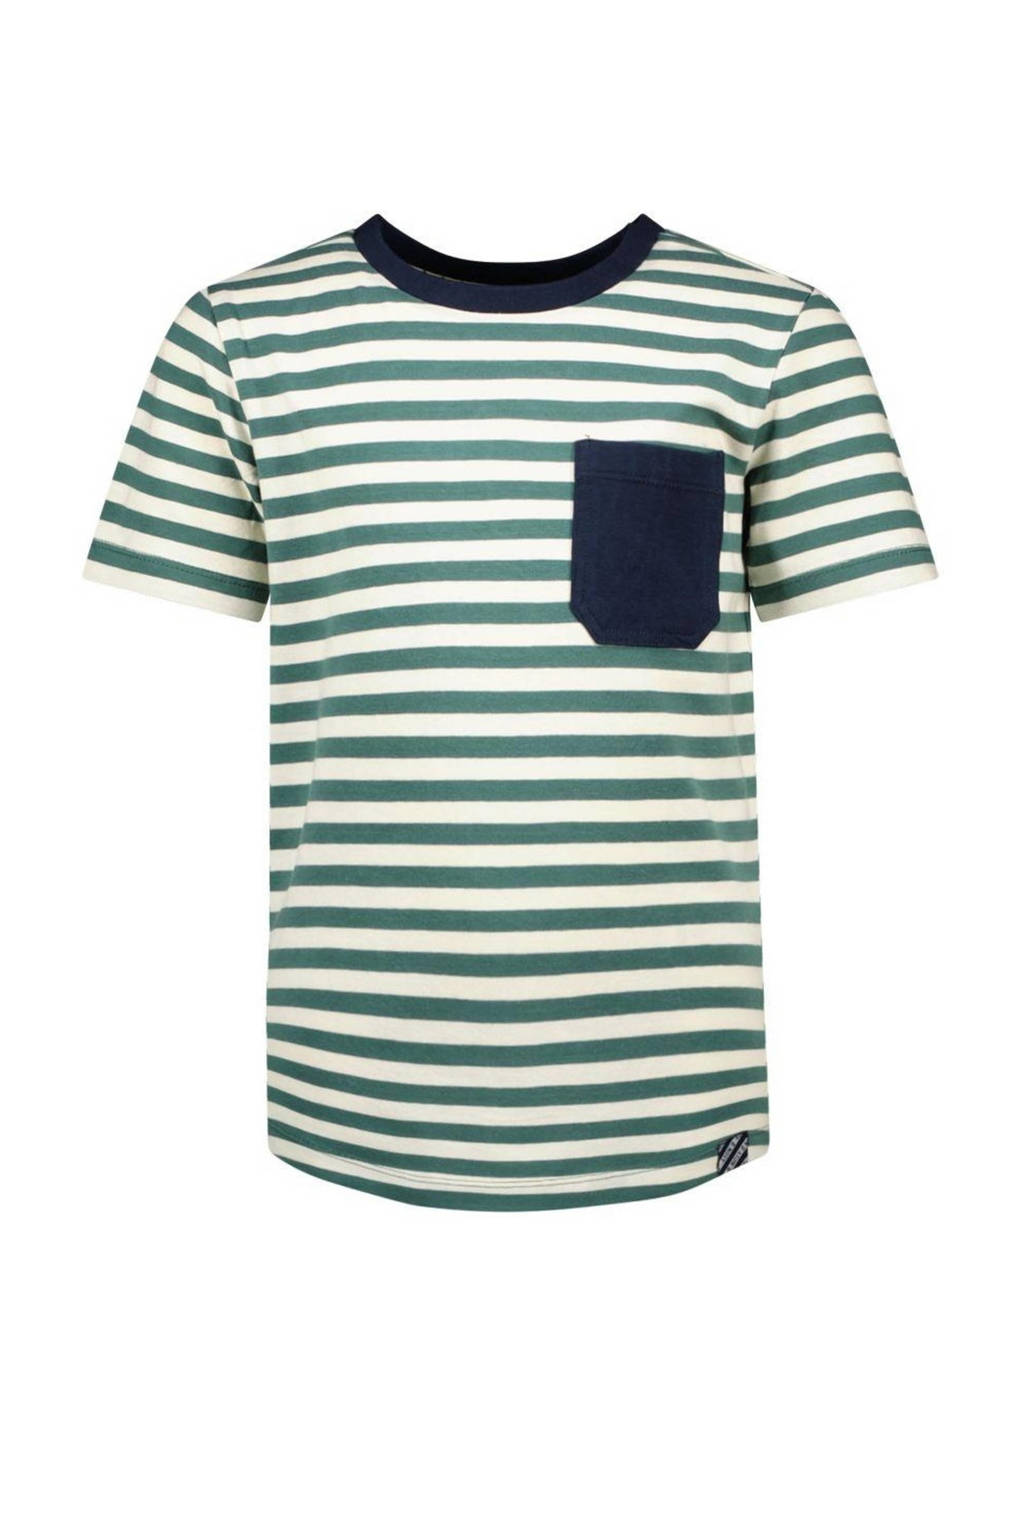 gestreept T-shirt Giel groen/ecru/donkerblauw